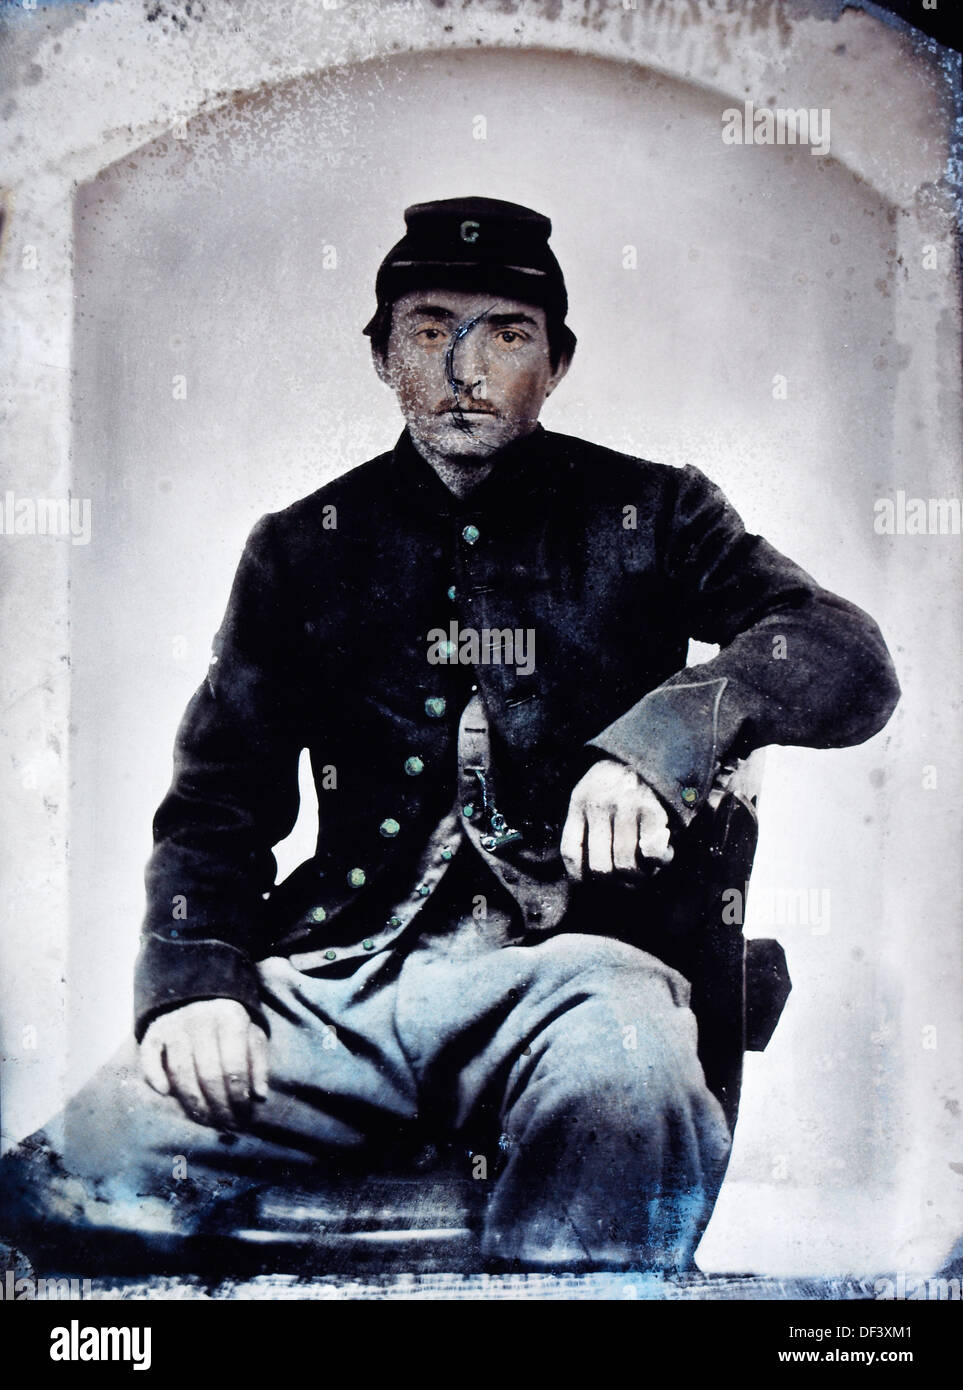 Union Soldier During U.S. Civil War, Portrait, Hand-Colored Photograph, 1861 Stock Photo